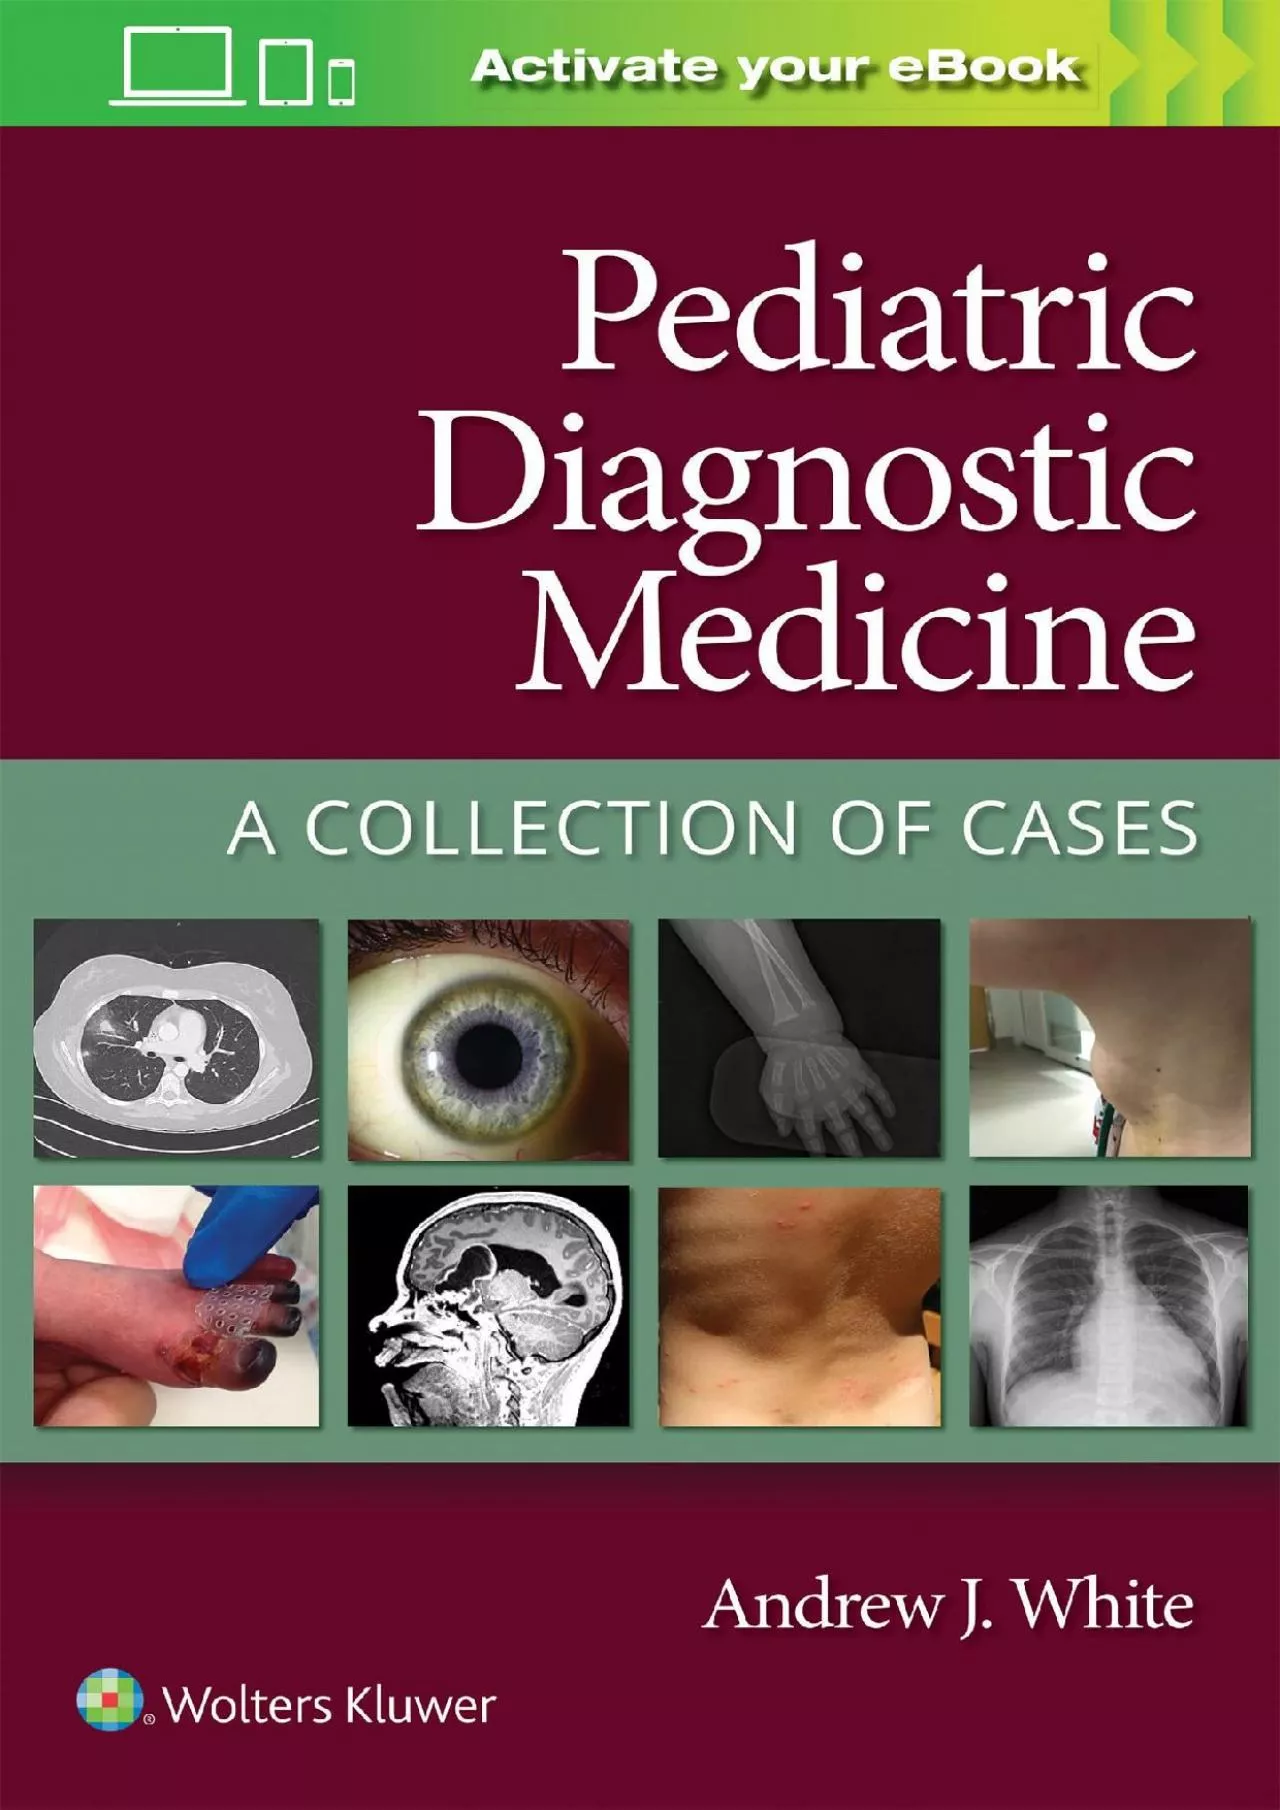 (DOWNLOAD)-Pediatric Diagnostic Medicine: A Collection of Cases